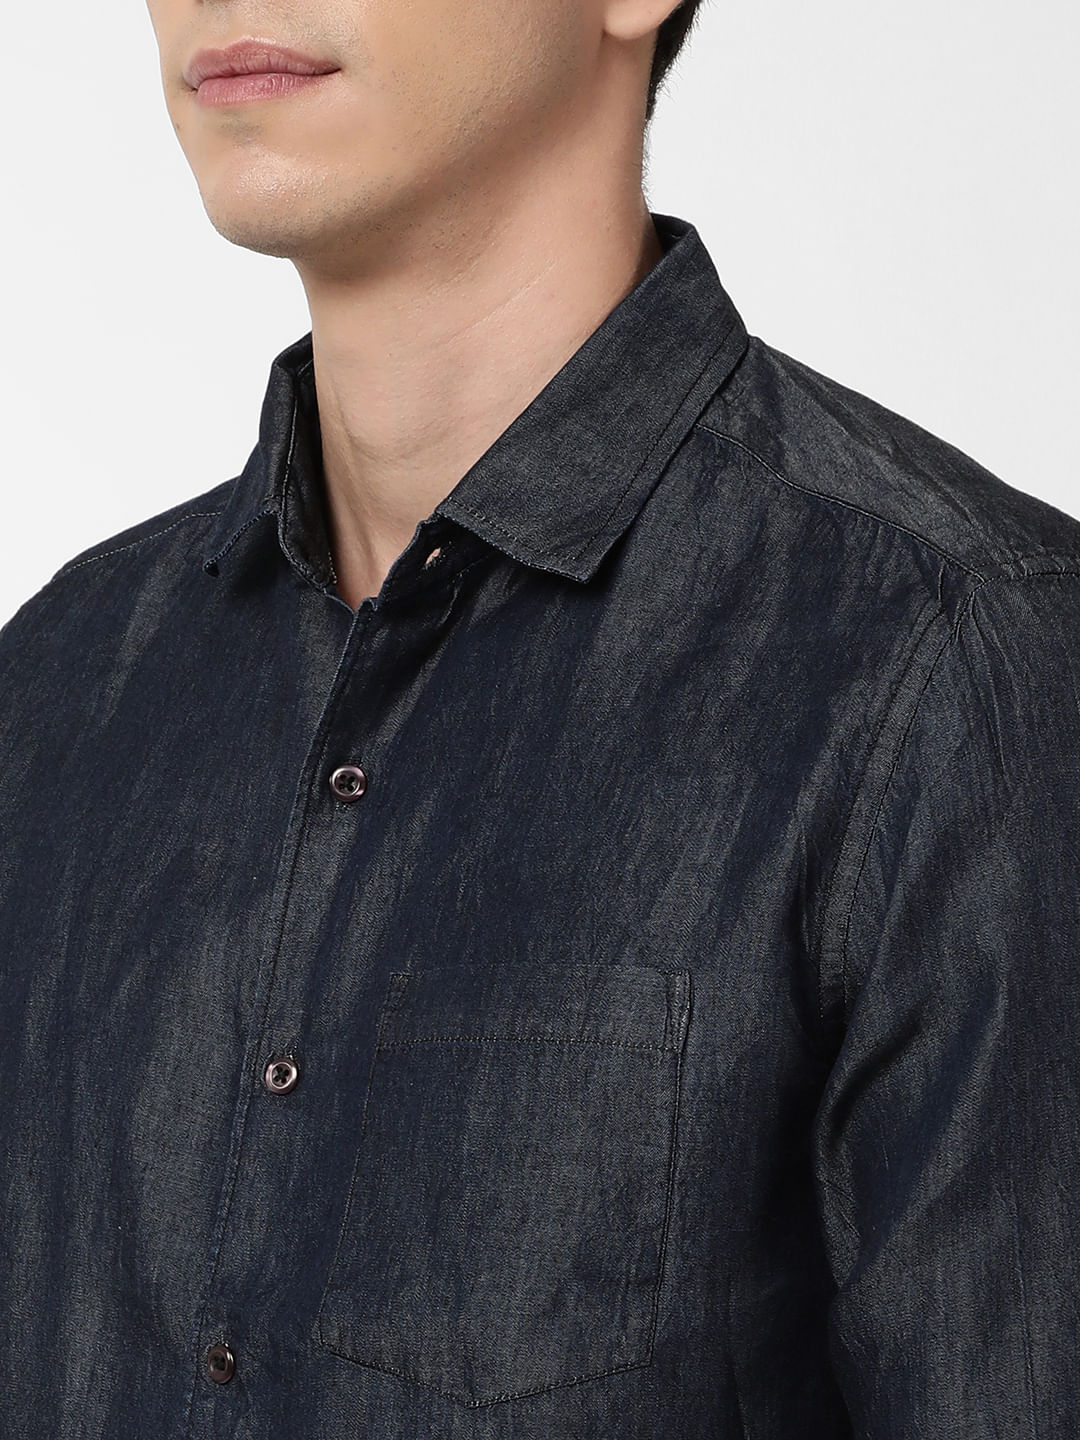 Wholesale Light Ash Grey Denim Shirt | Grey denim shirt, Wholesale denim, Denim  shirt